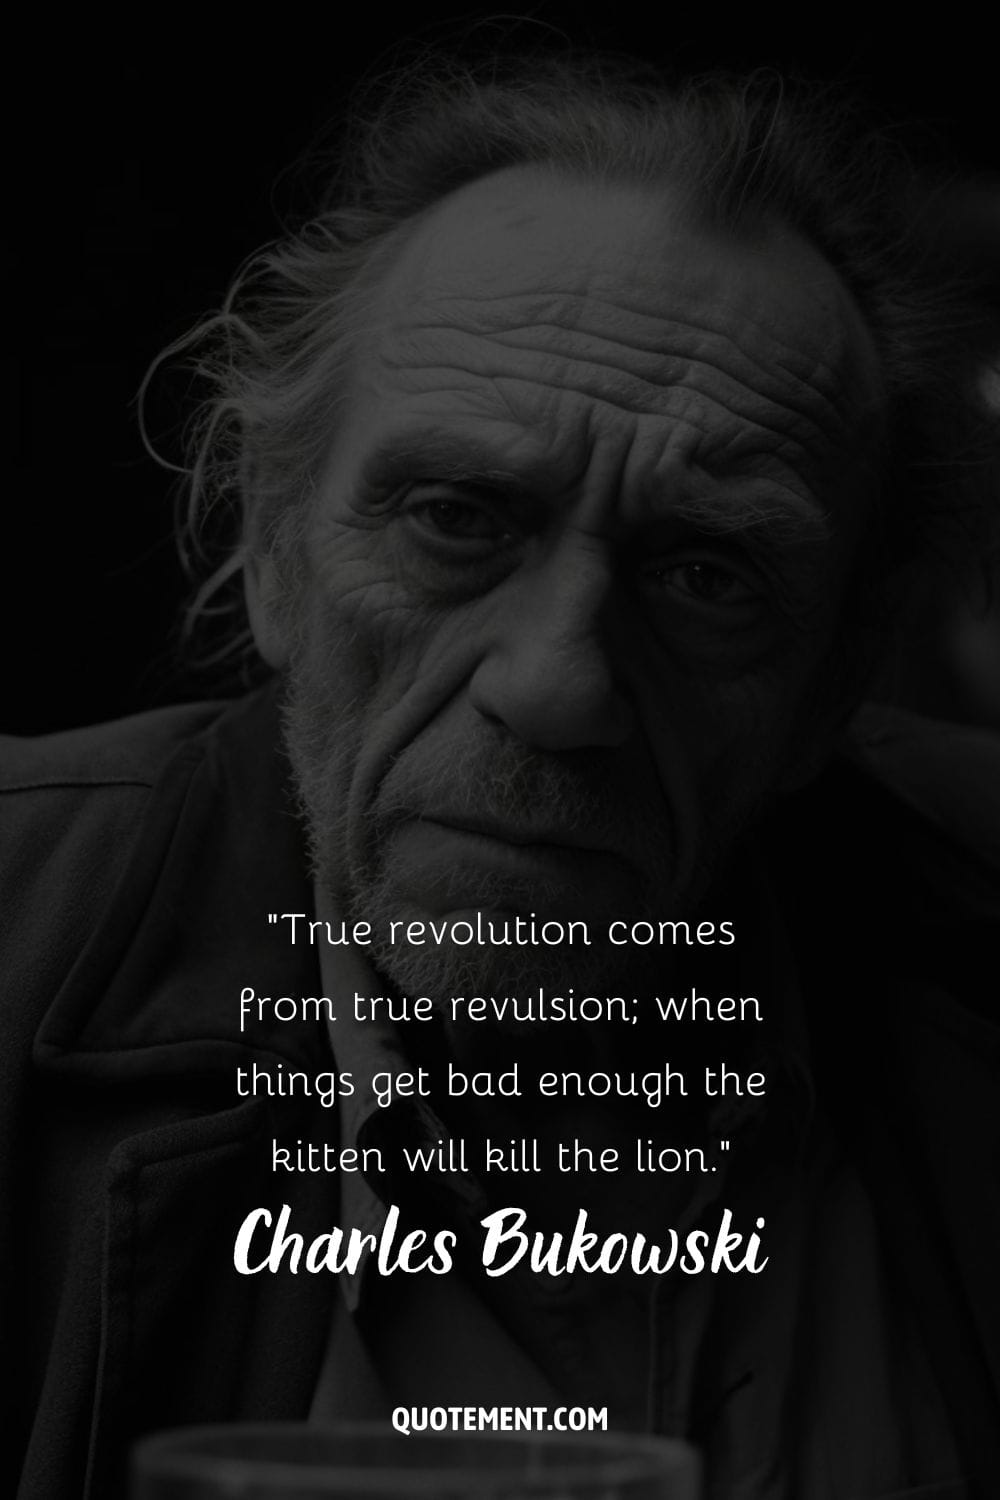 thoughtful visage of Charles Bukowski